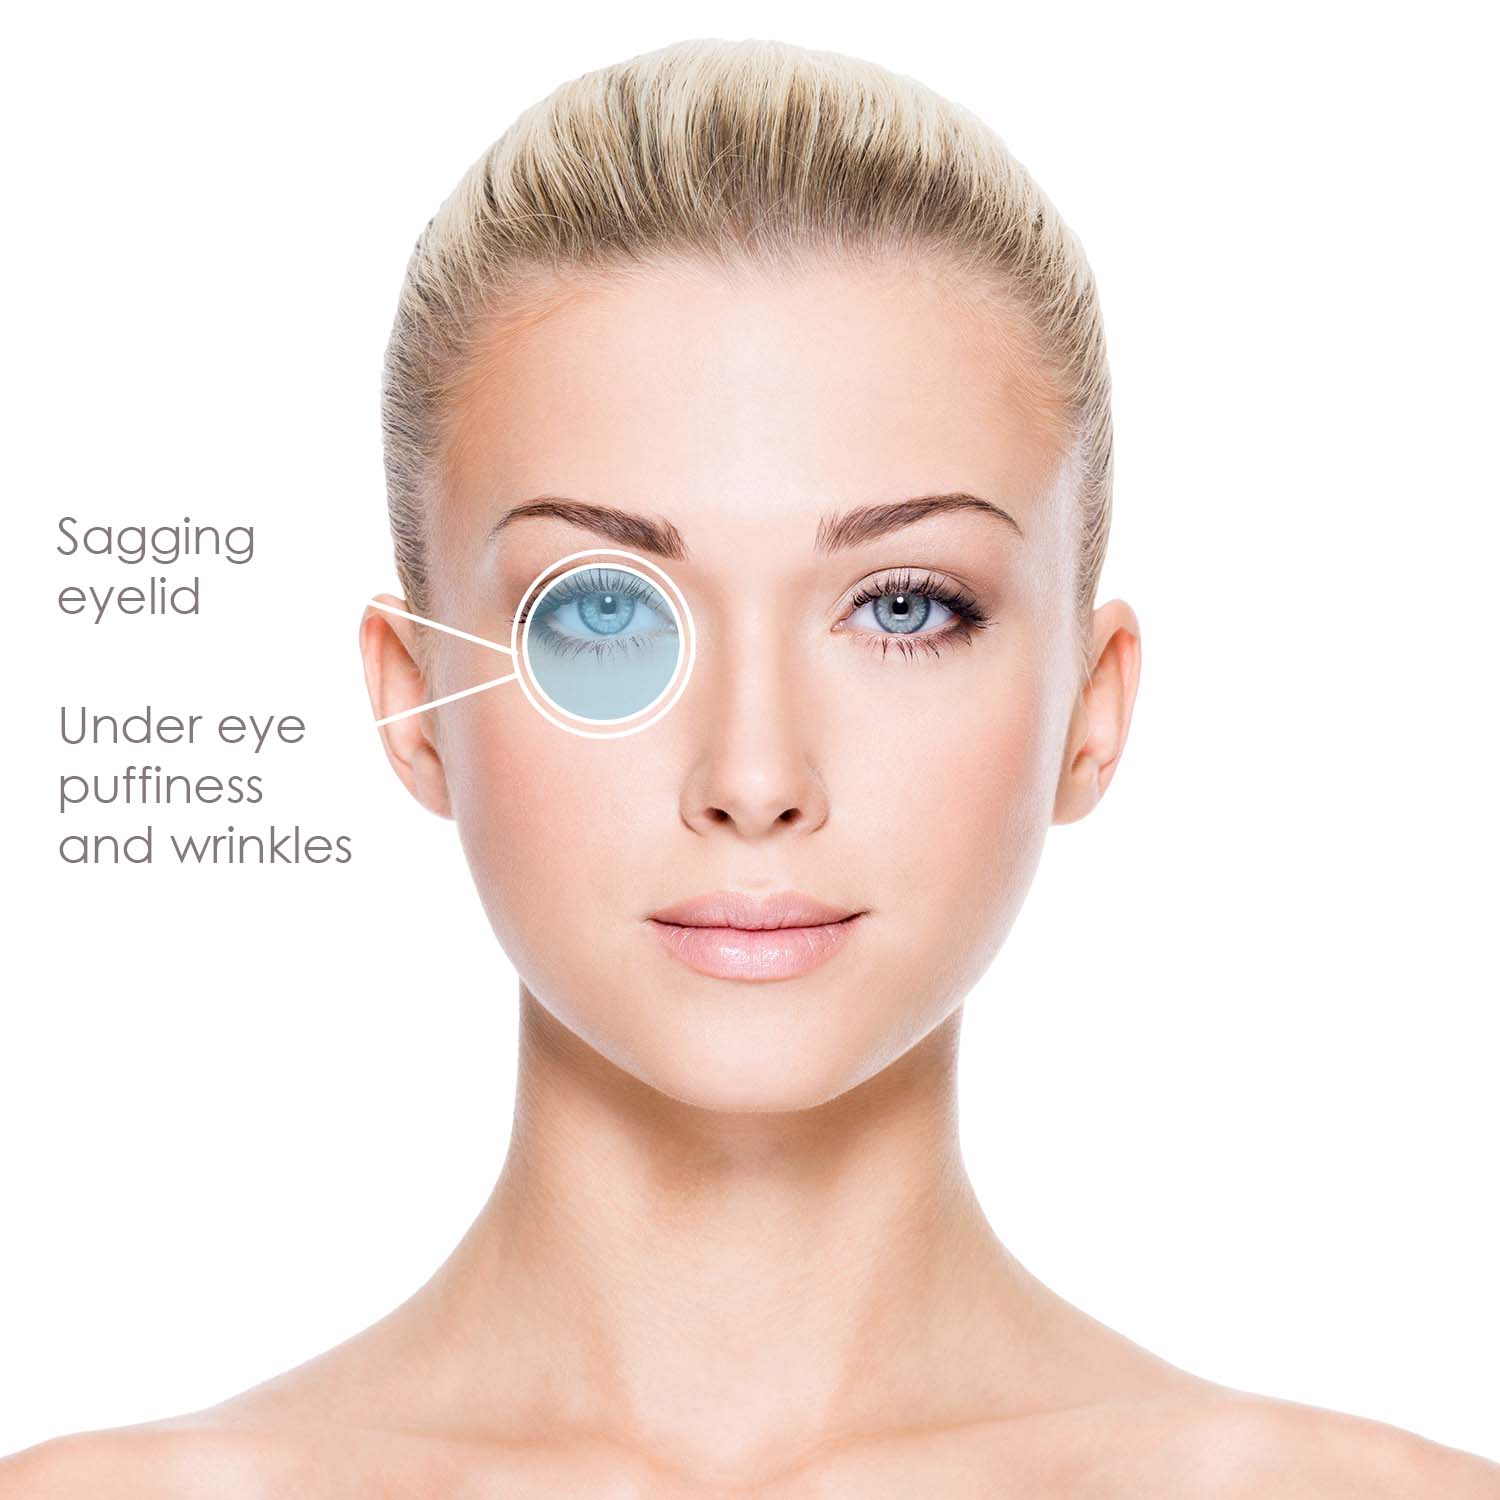 undereye-puffiness-wrinkles-sagging-eyelid